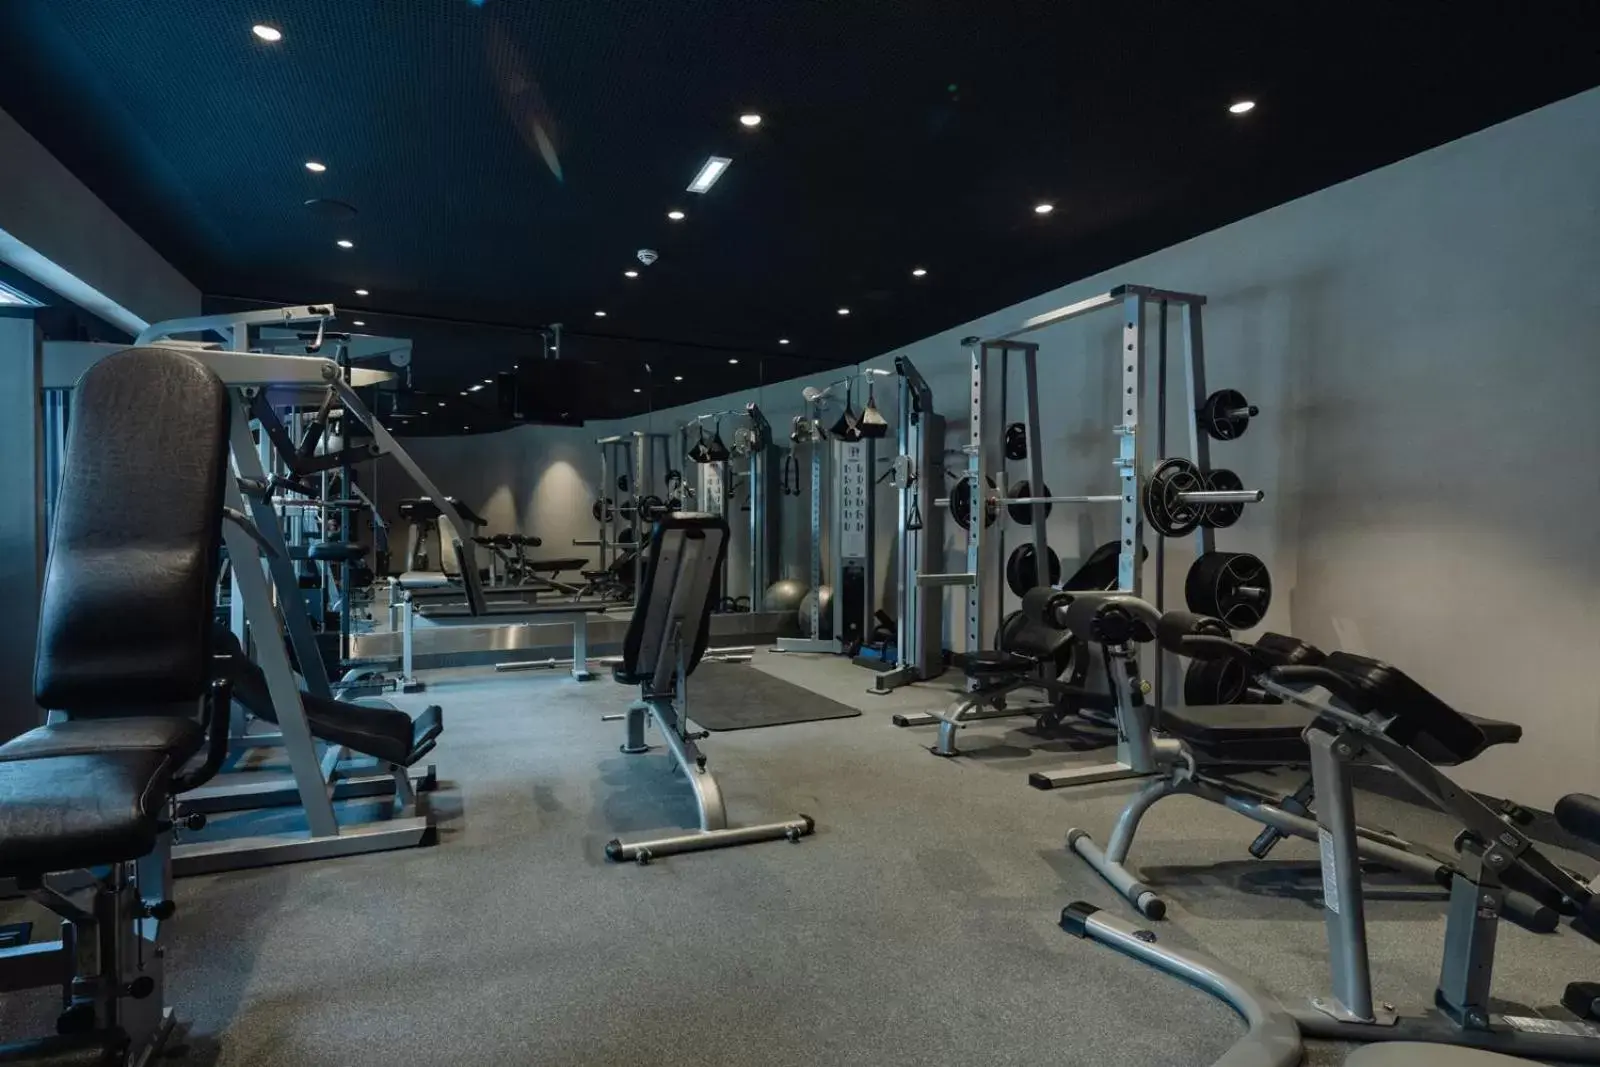 Fitness centre/facilities, Fitness Center/Facilities in JOHANN Schladming